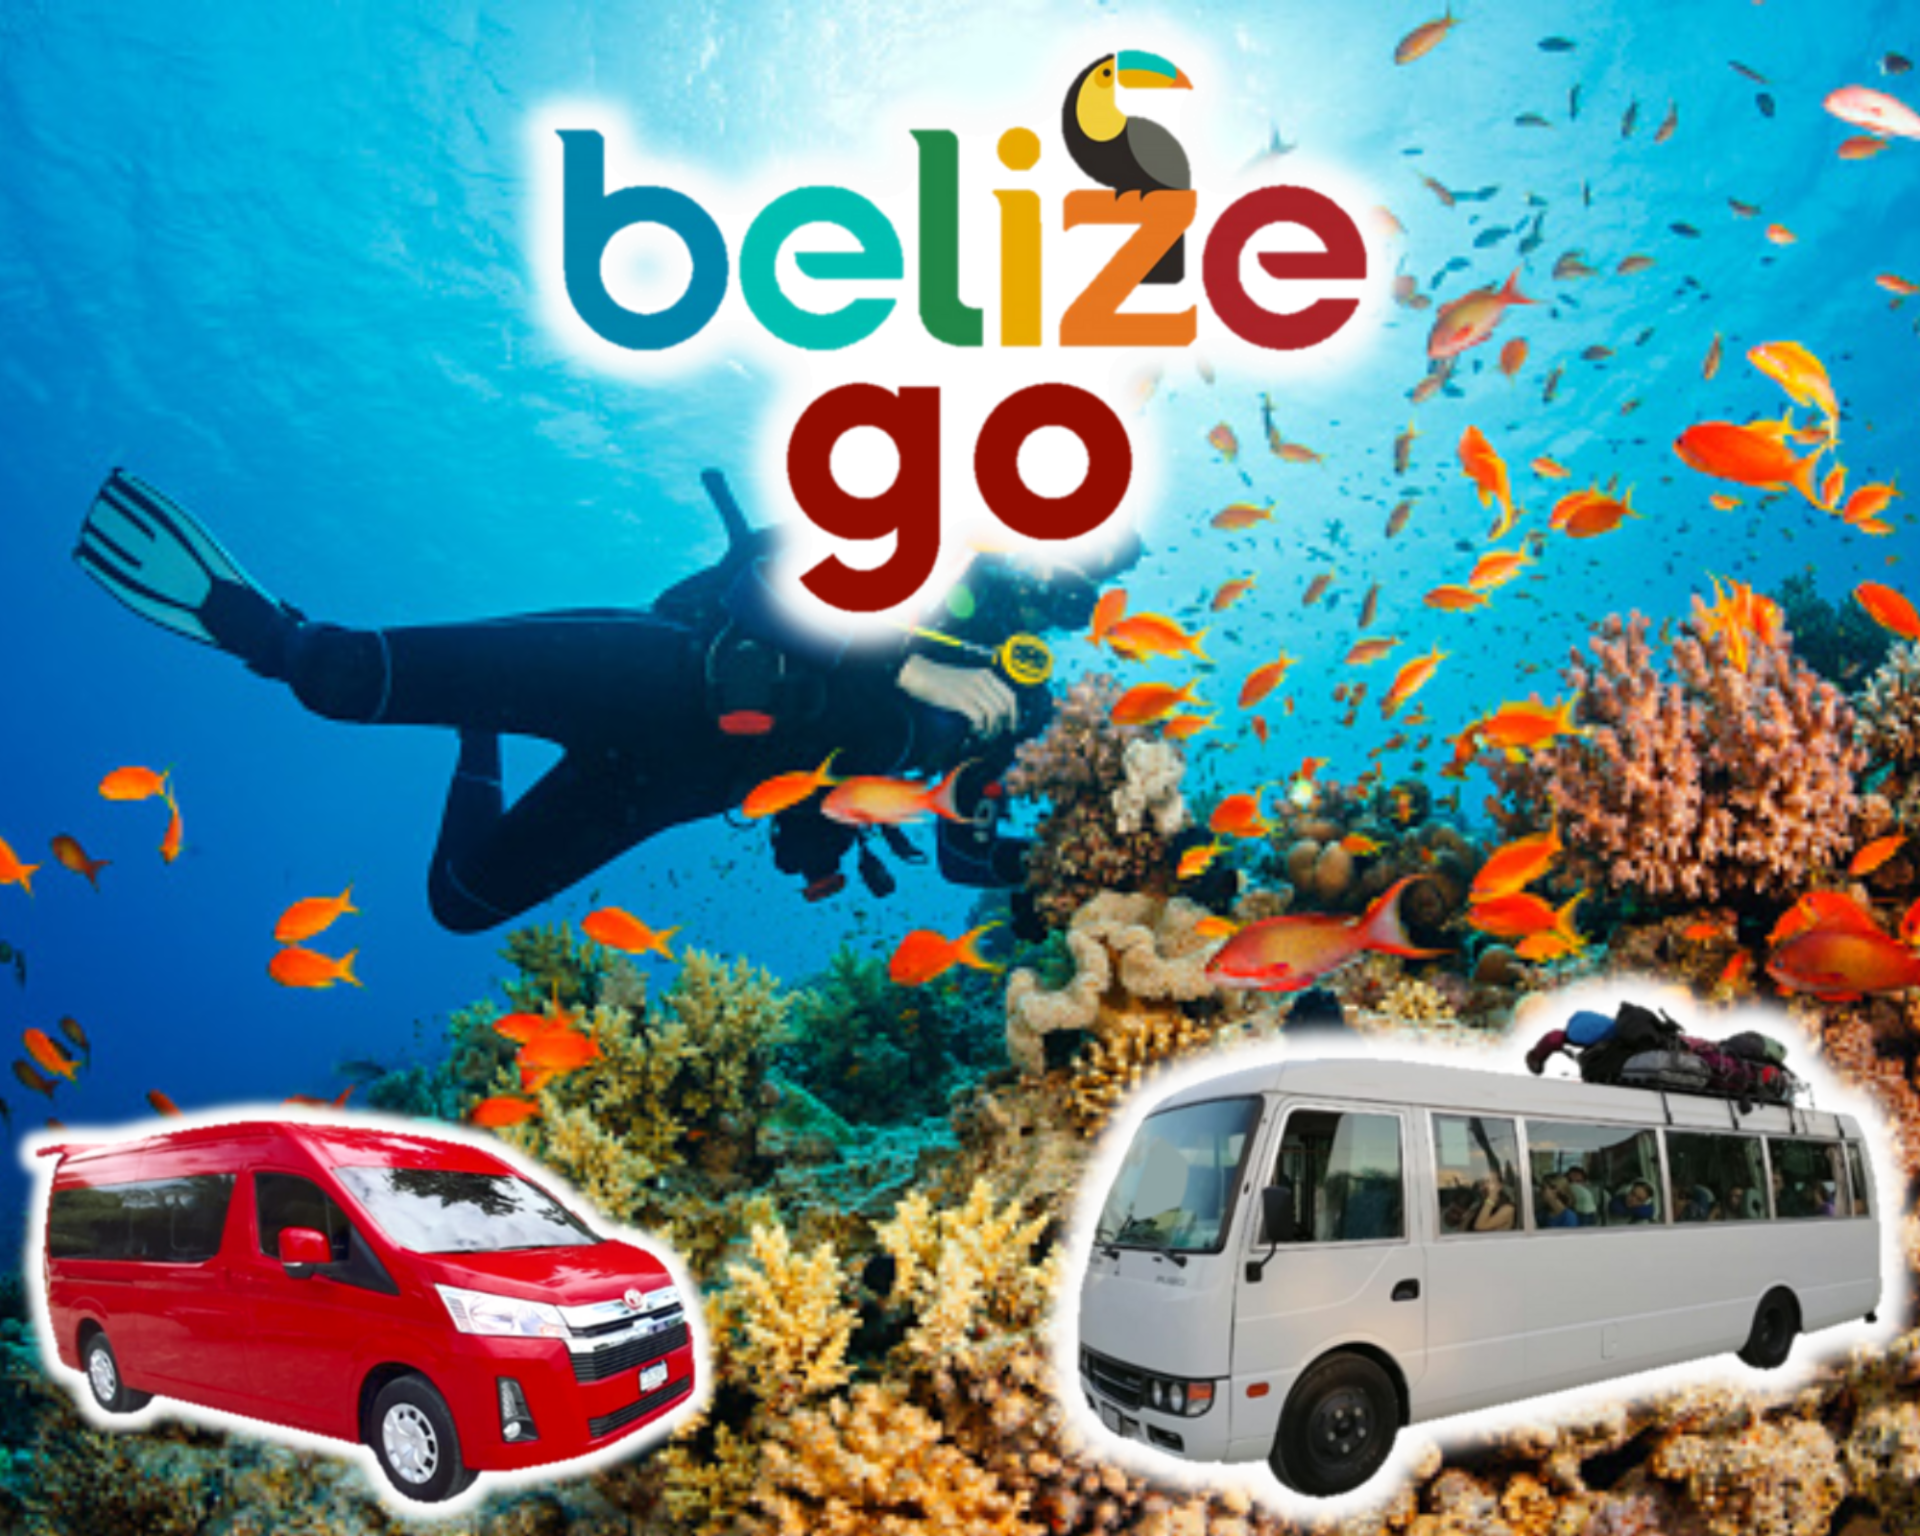 belize mayan tours & shuttles services